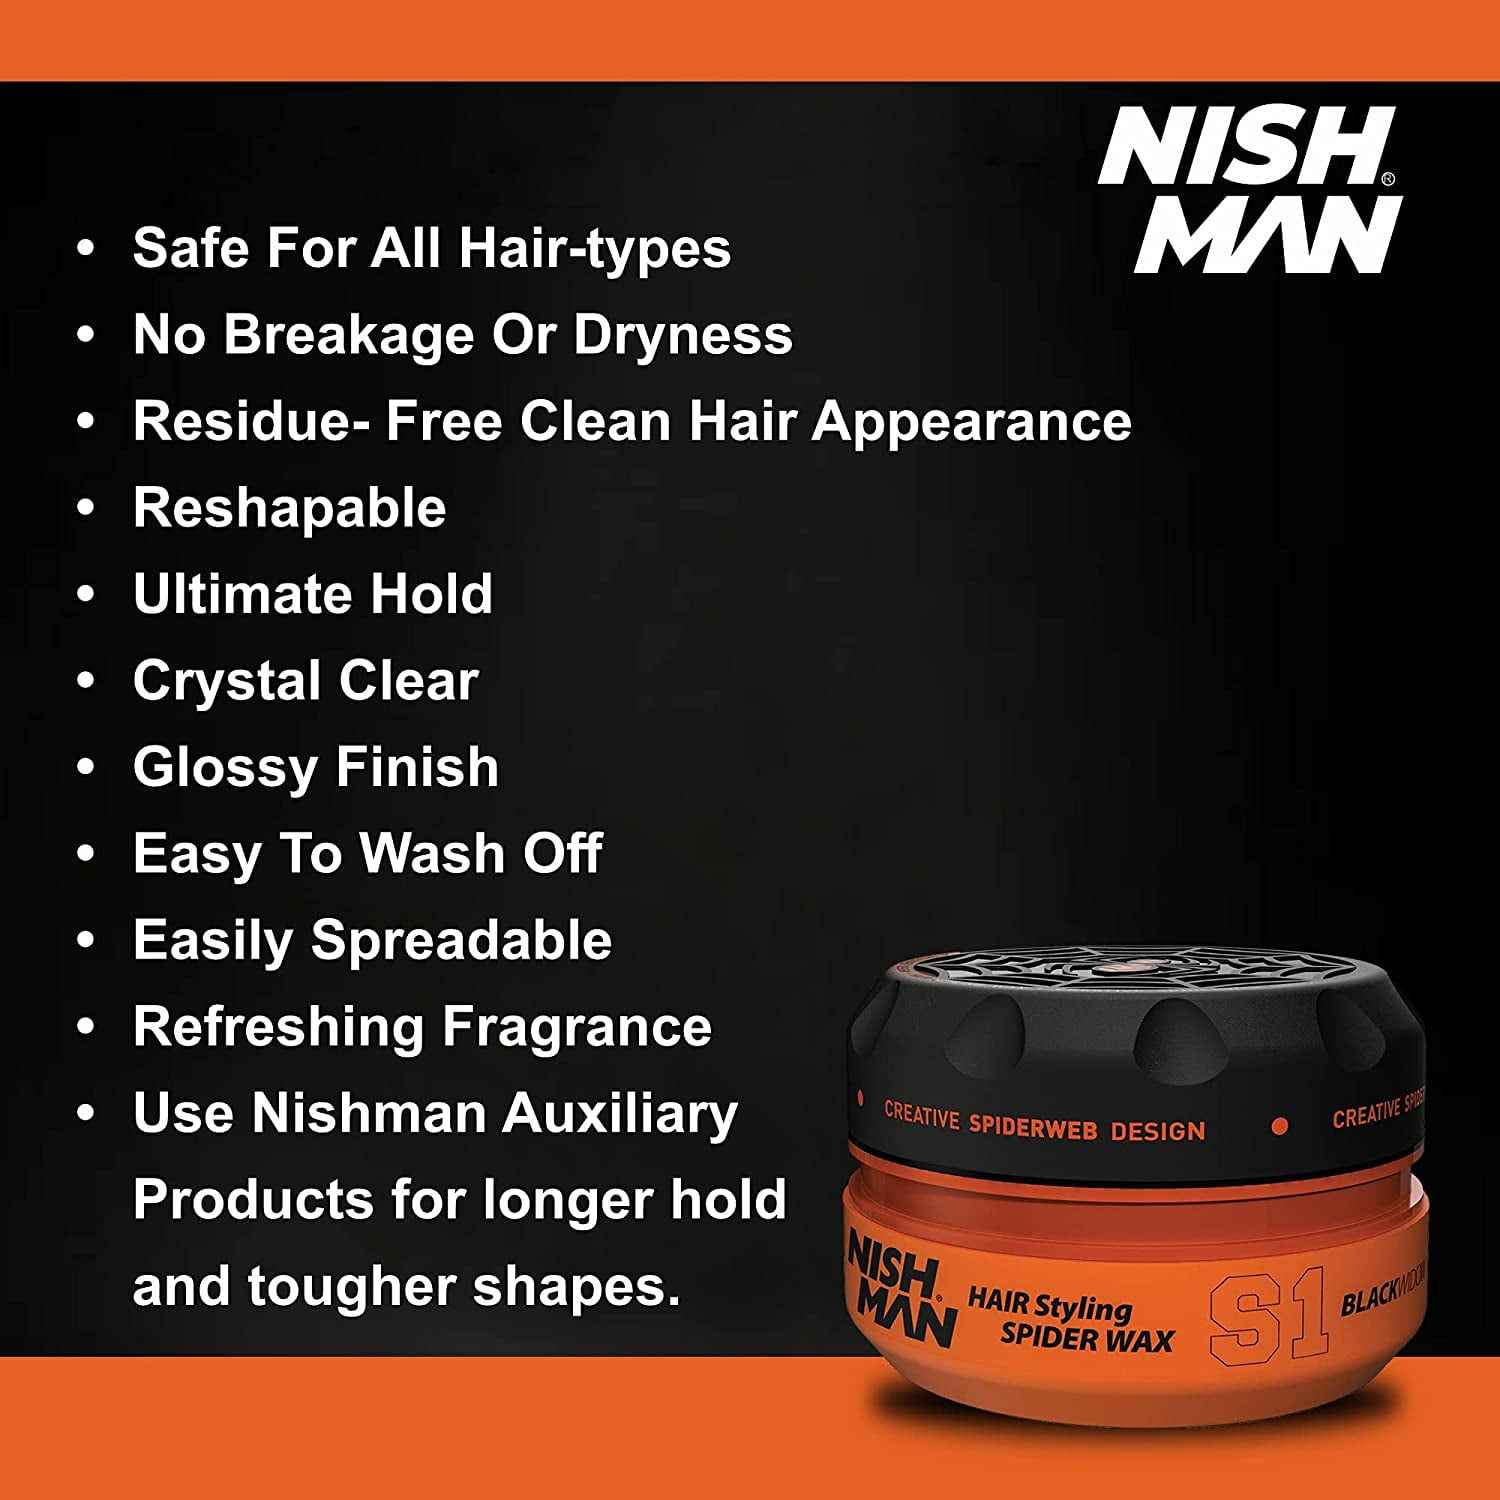  nishman Hair Styling Series (S4 Spider Wax Argan